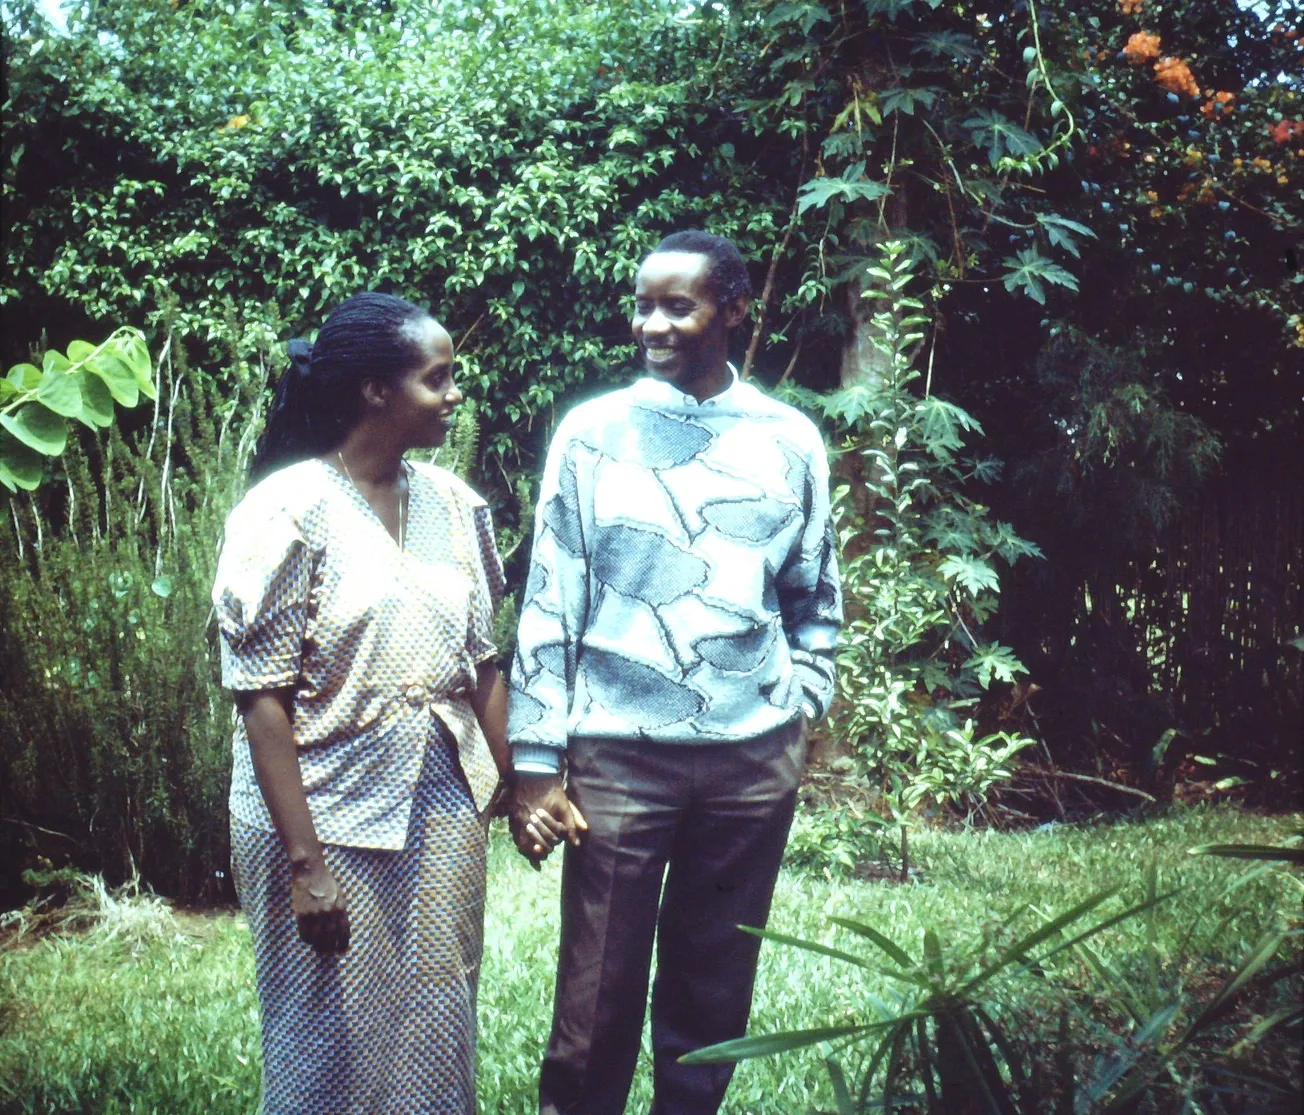 Reflection: Rwandan martyrs Cyprien and Daphrose Rugamba modeled pacifism, prayer